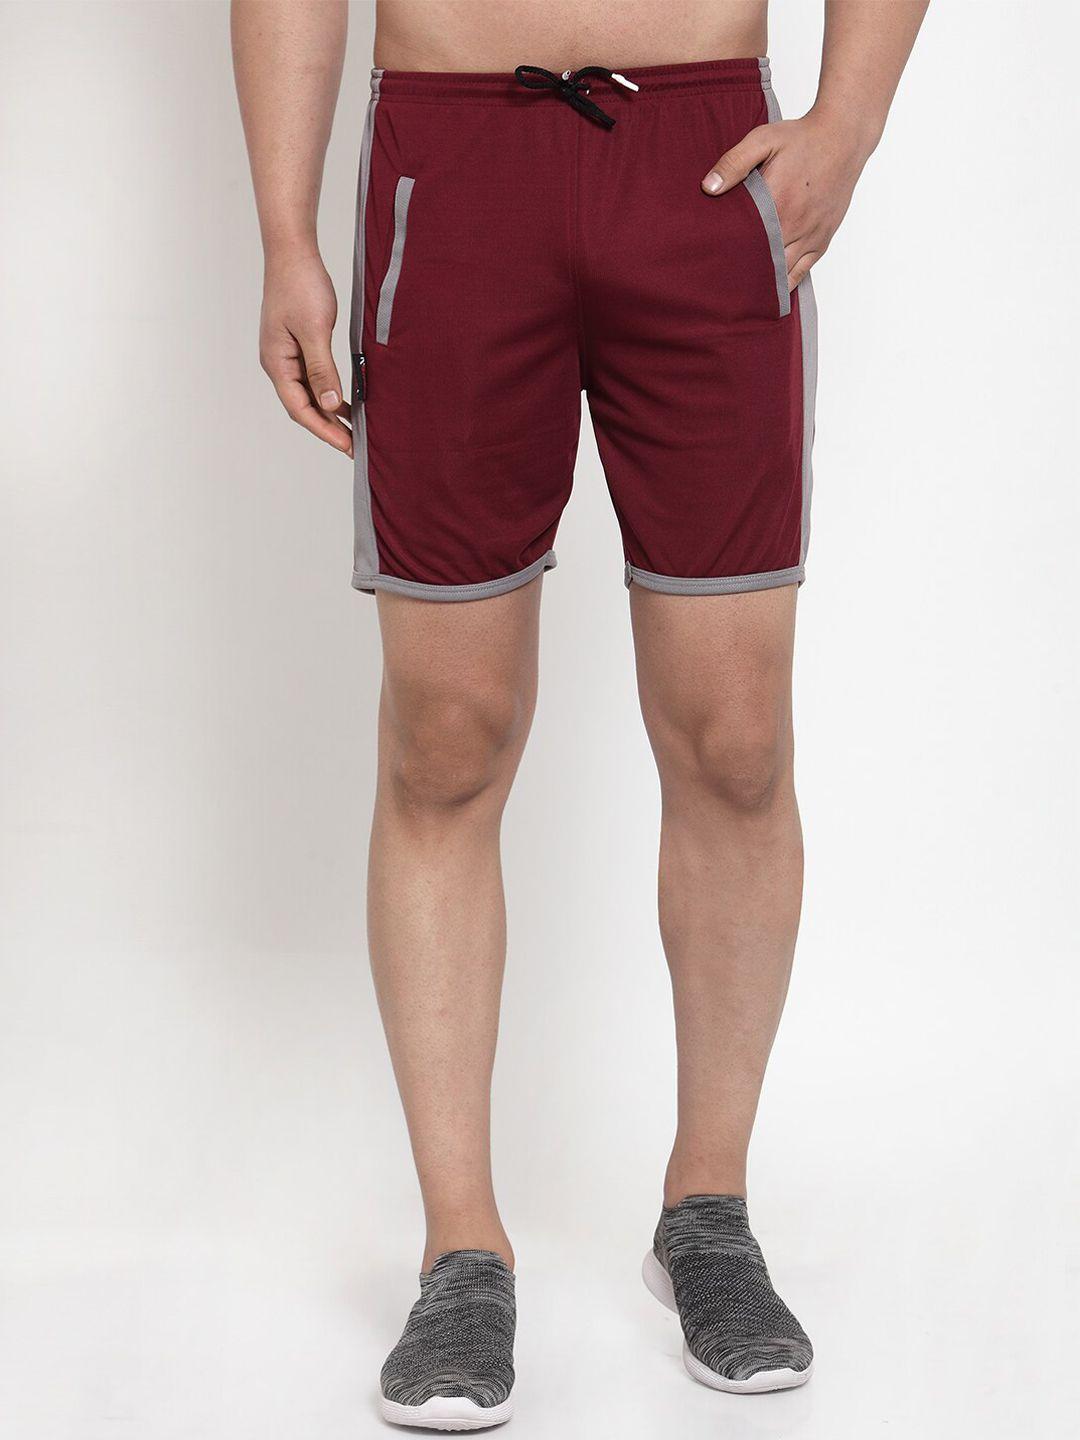 klotthe-colourblocked-rapid-dry-sports-shorts